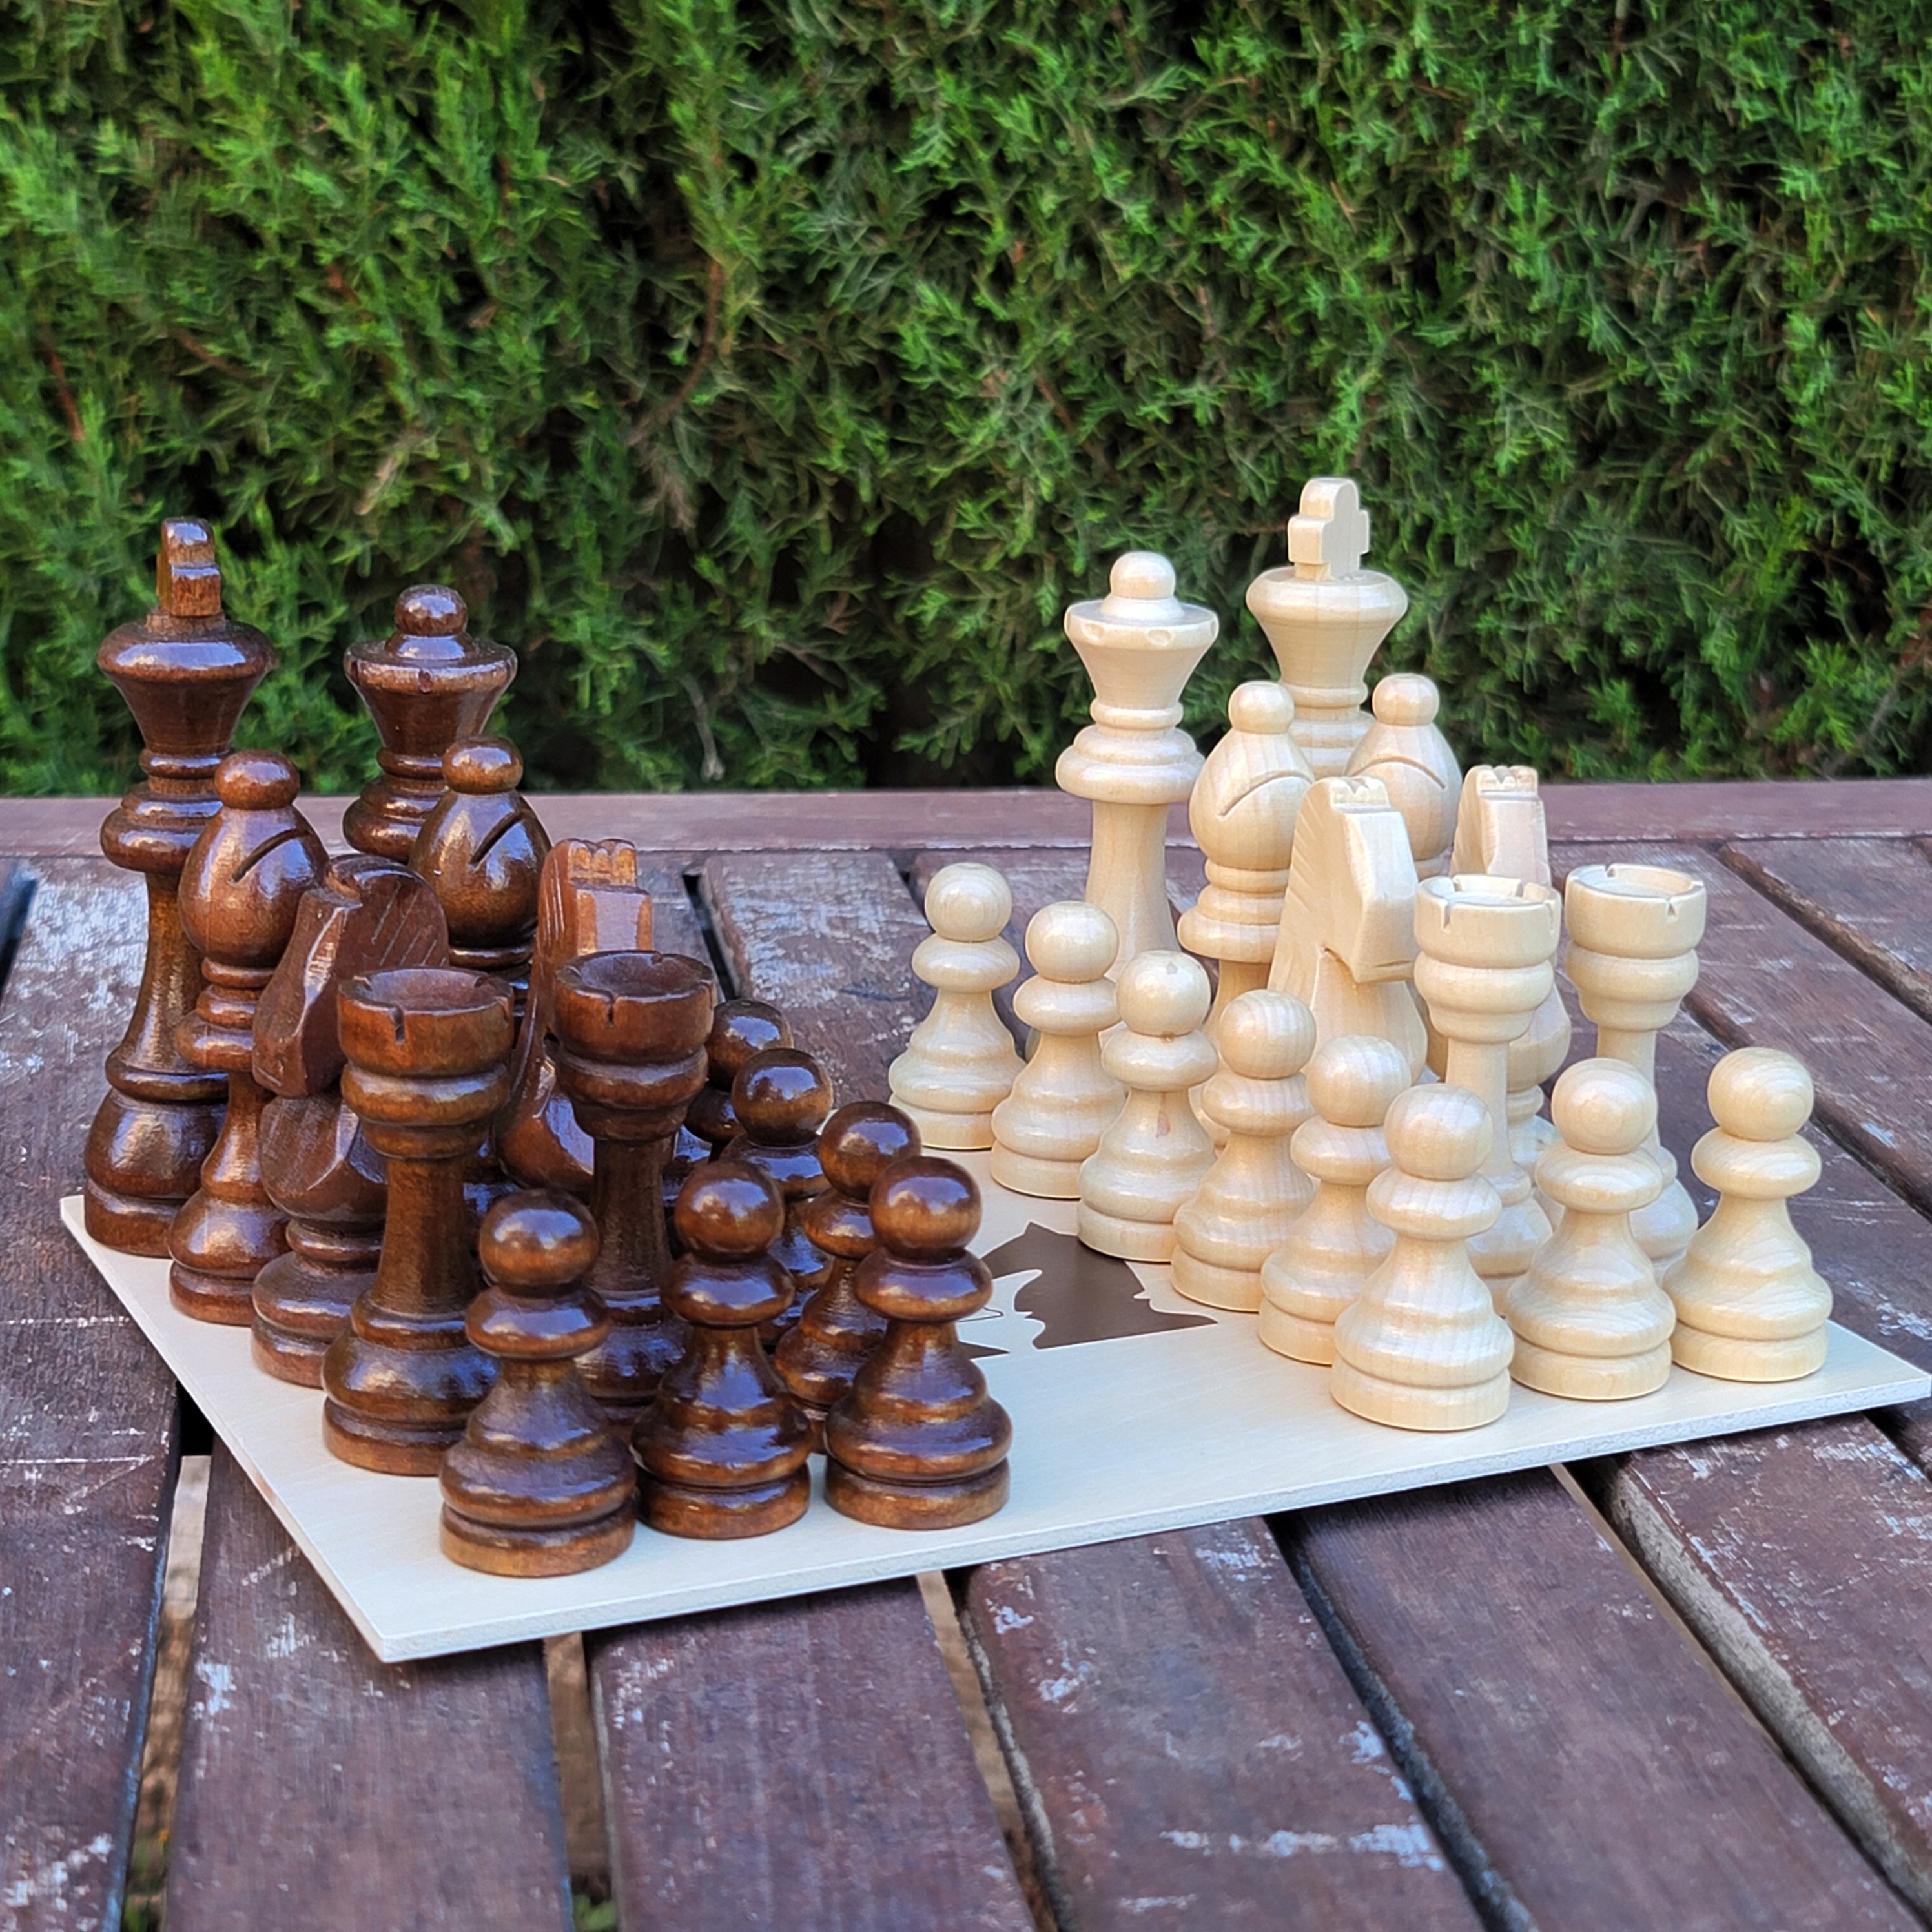 Ornate Chess Board - Walnut & Gold - A3 Large Size